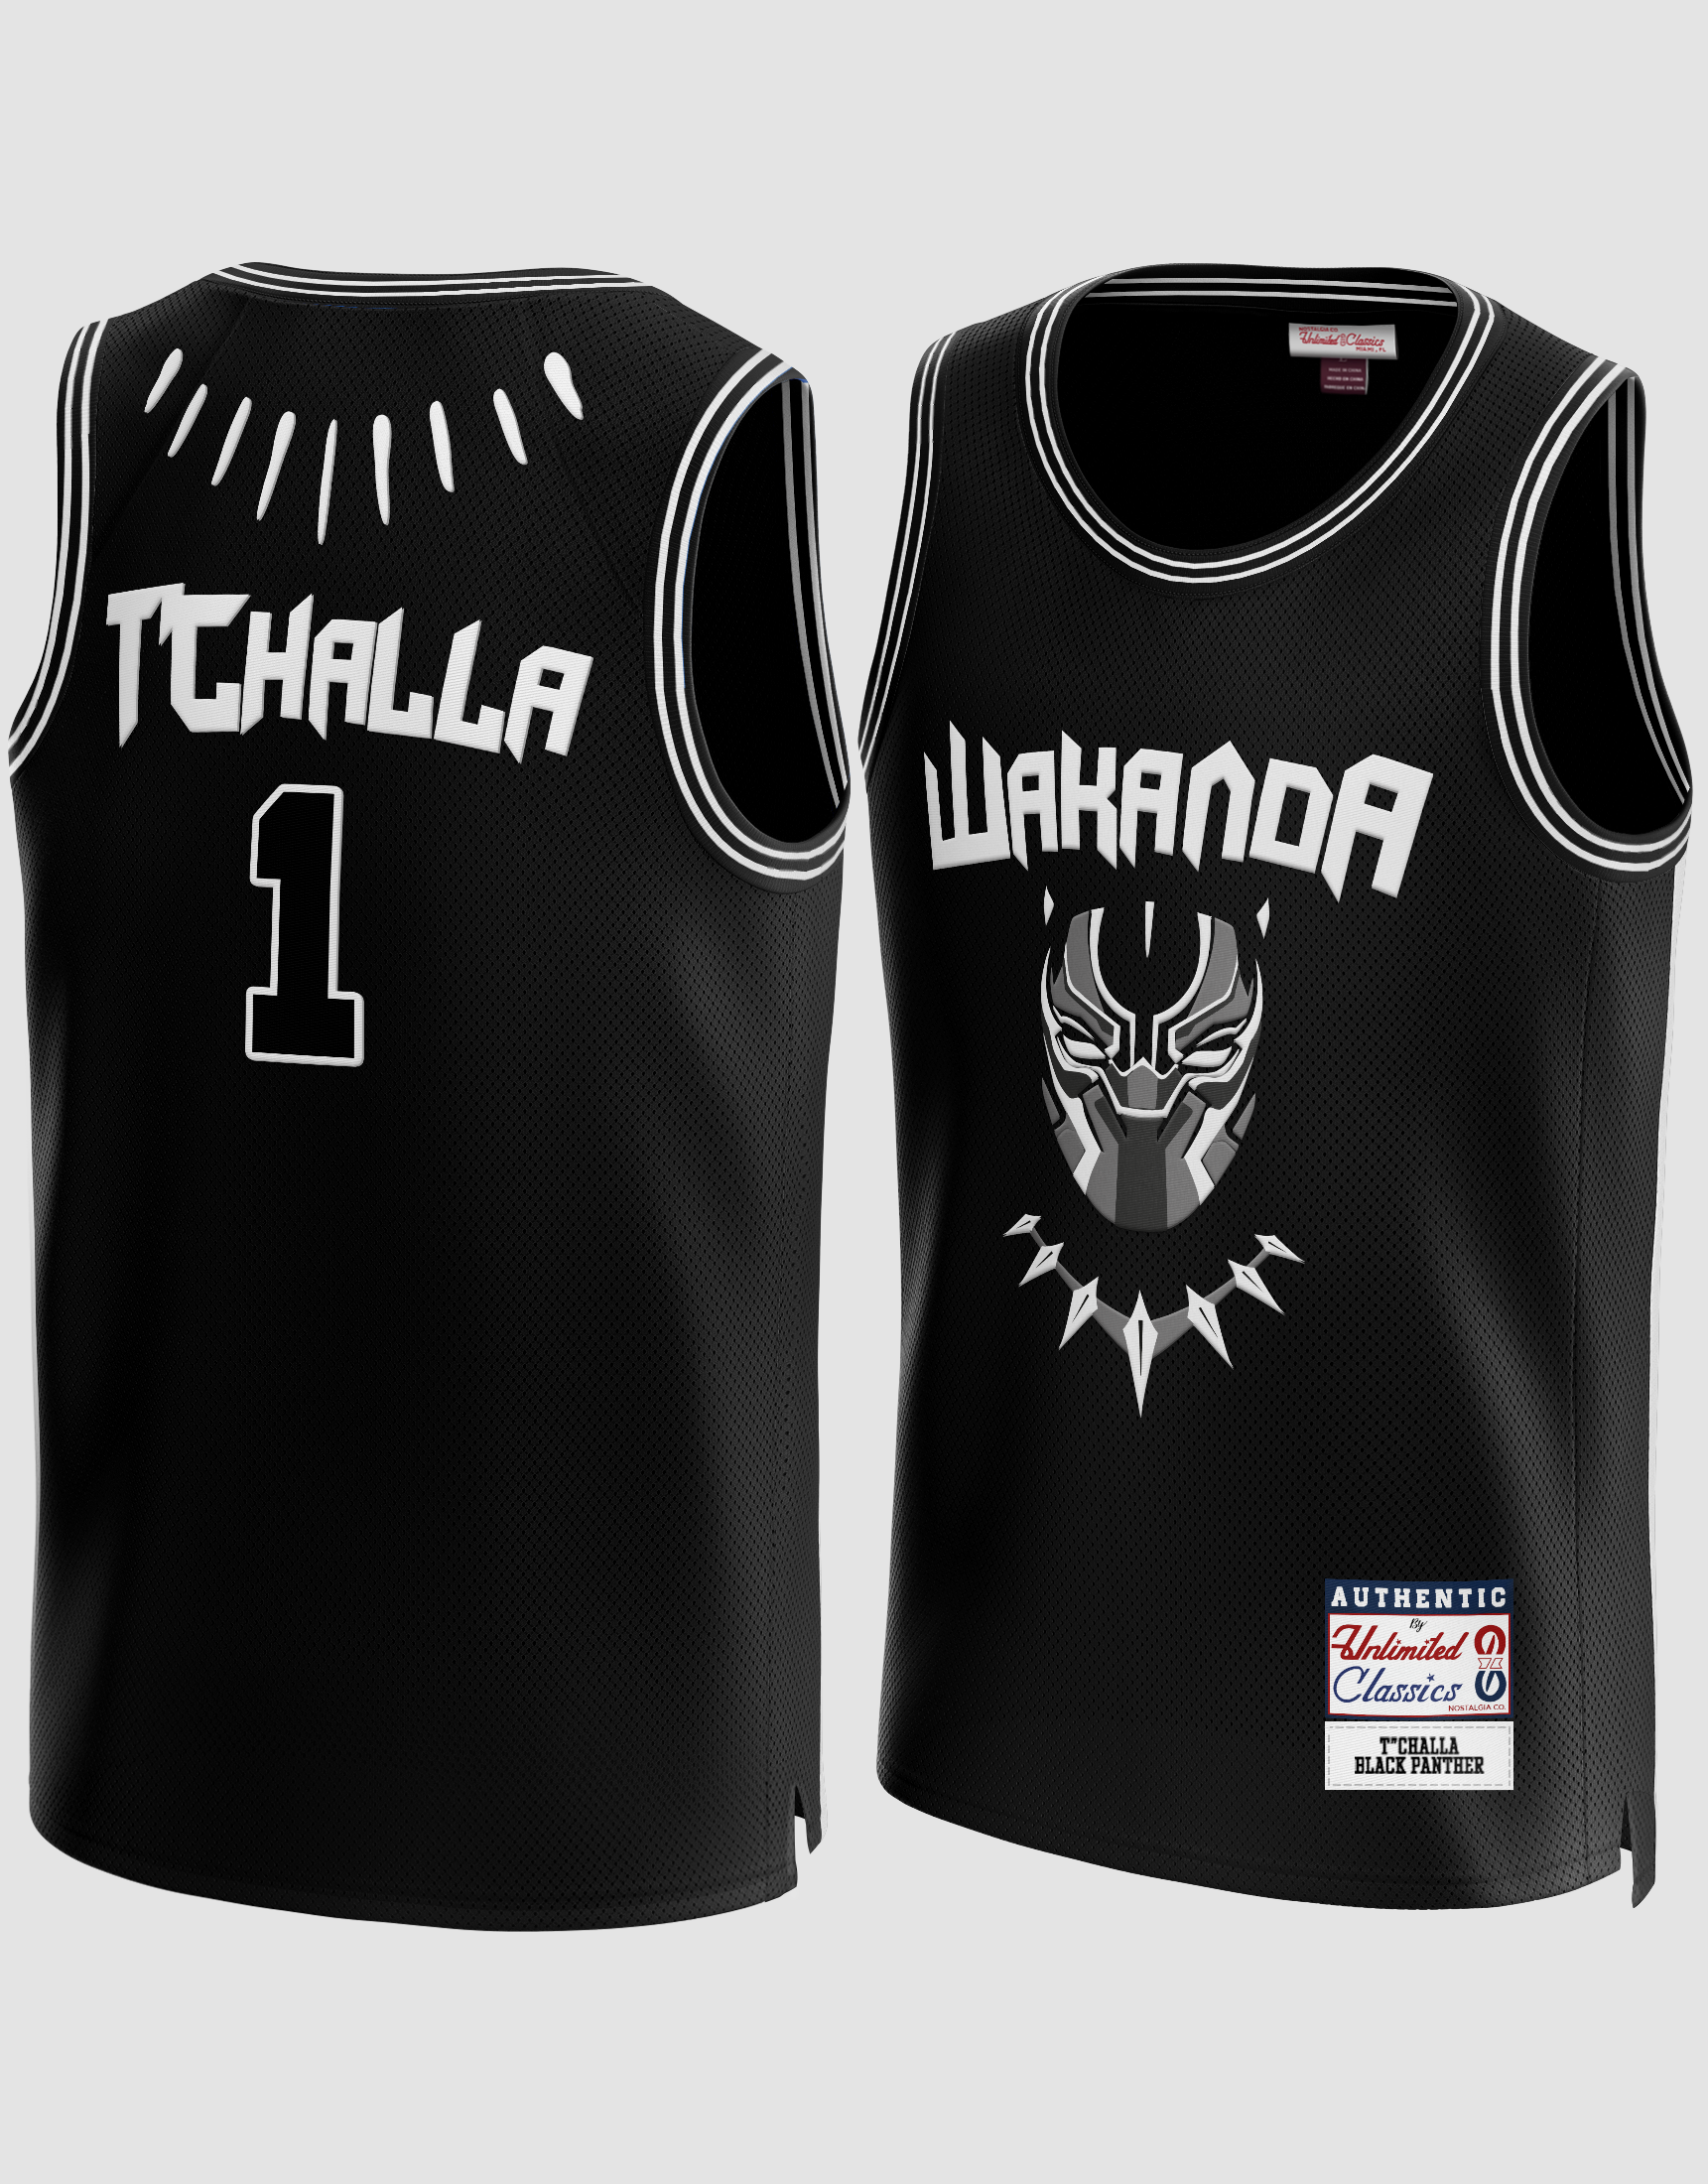 Camiseta de baloncesto T'Challa #1 Wakanda Black Panther